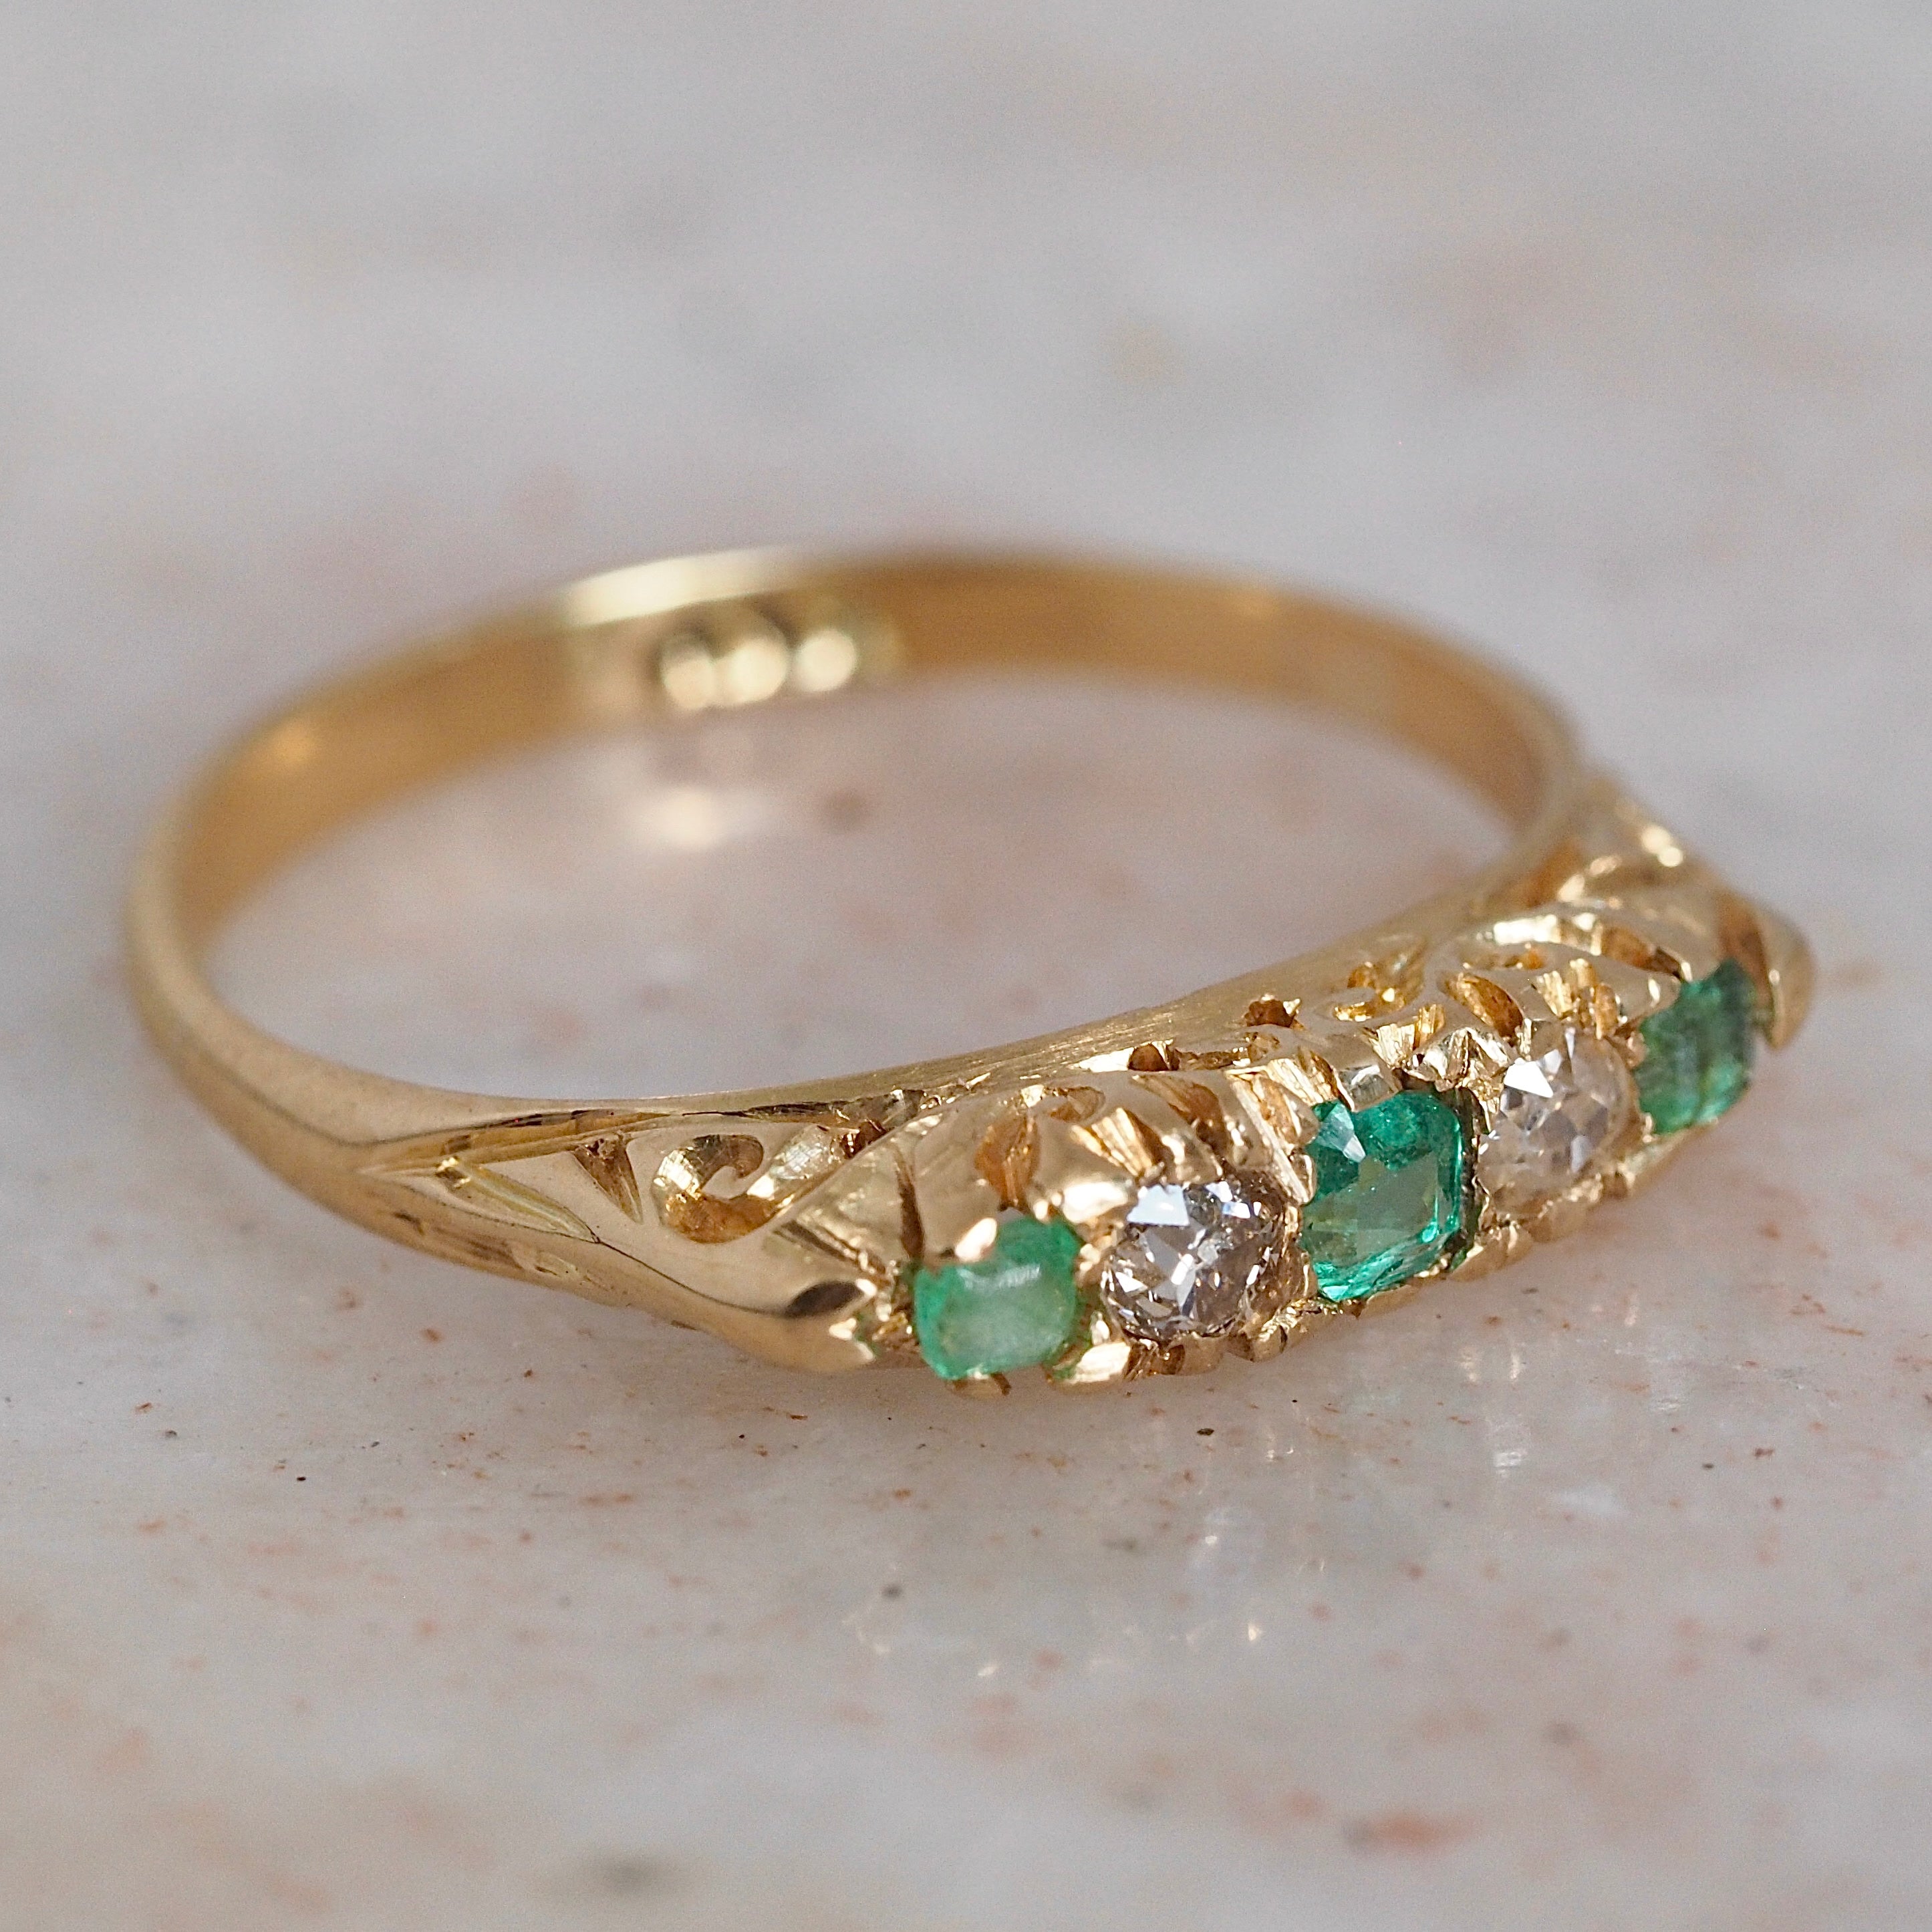 Antique English Art Nouveau 18k Gold Five Stone Emerald and Diamond Ring